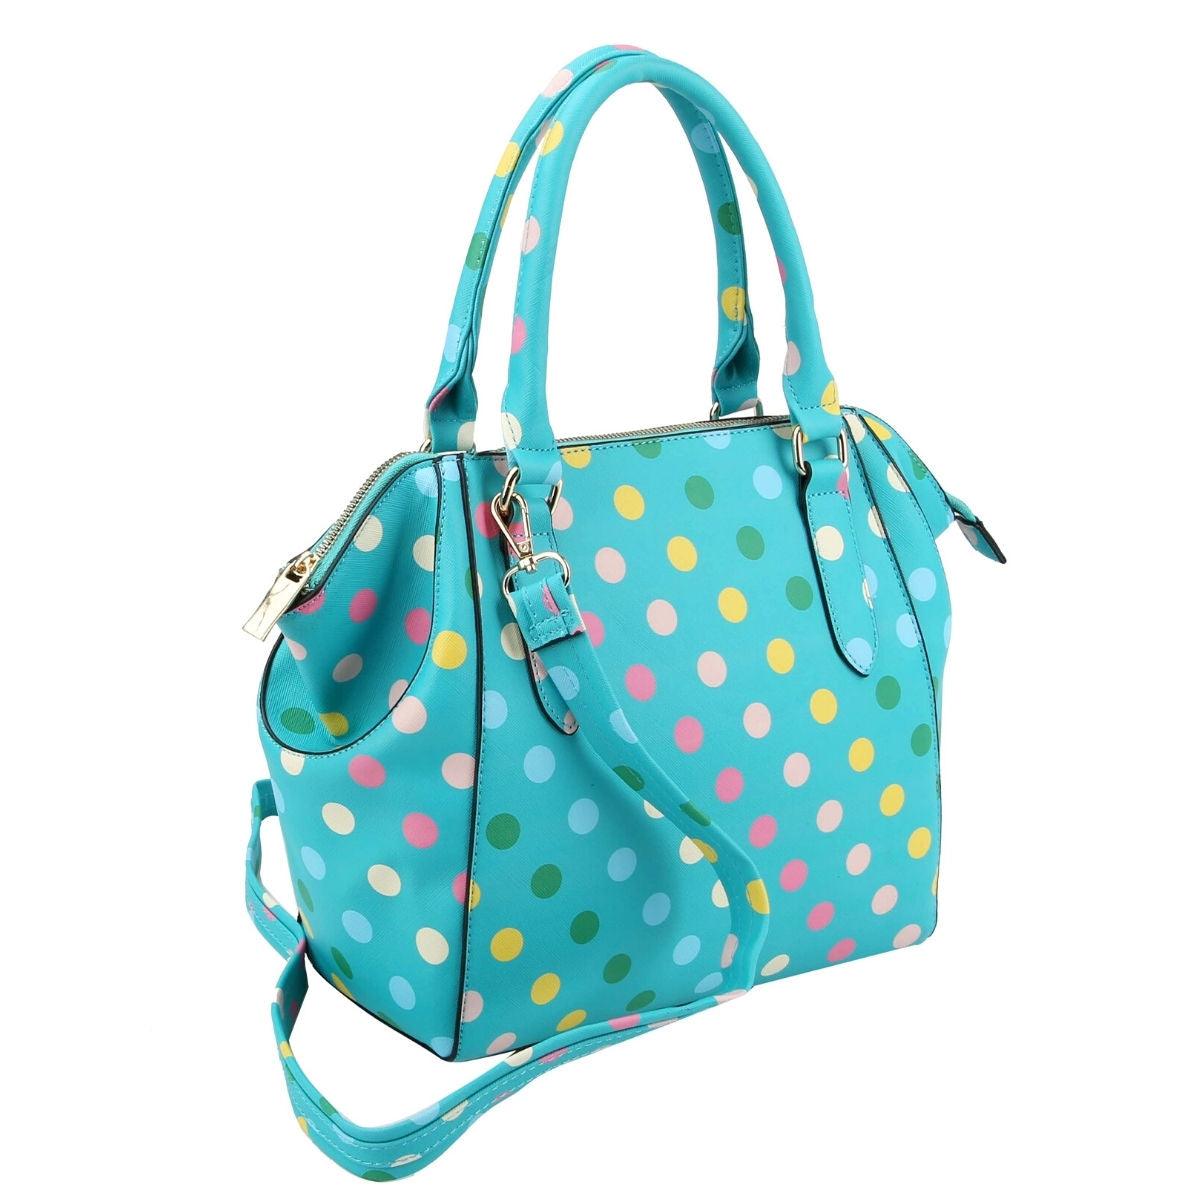 Stylish Turquoise Handbag Set: Polka Dot Print - Perfect Accessory